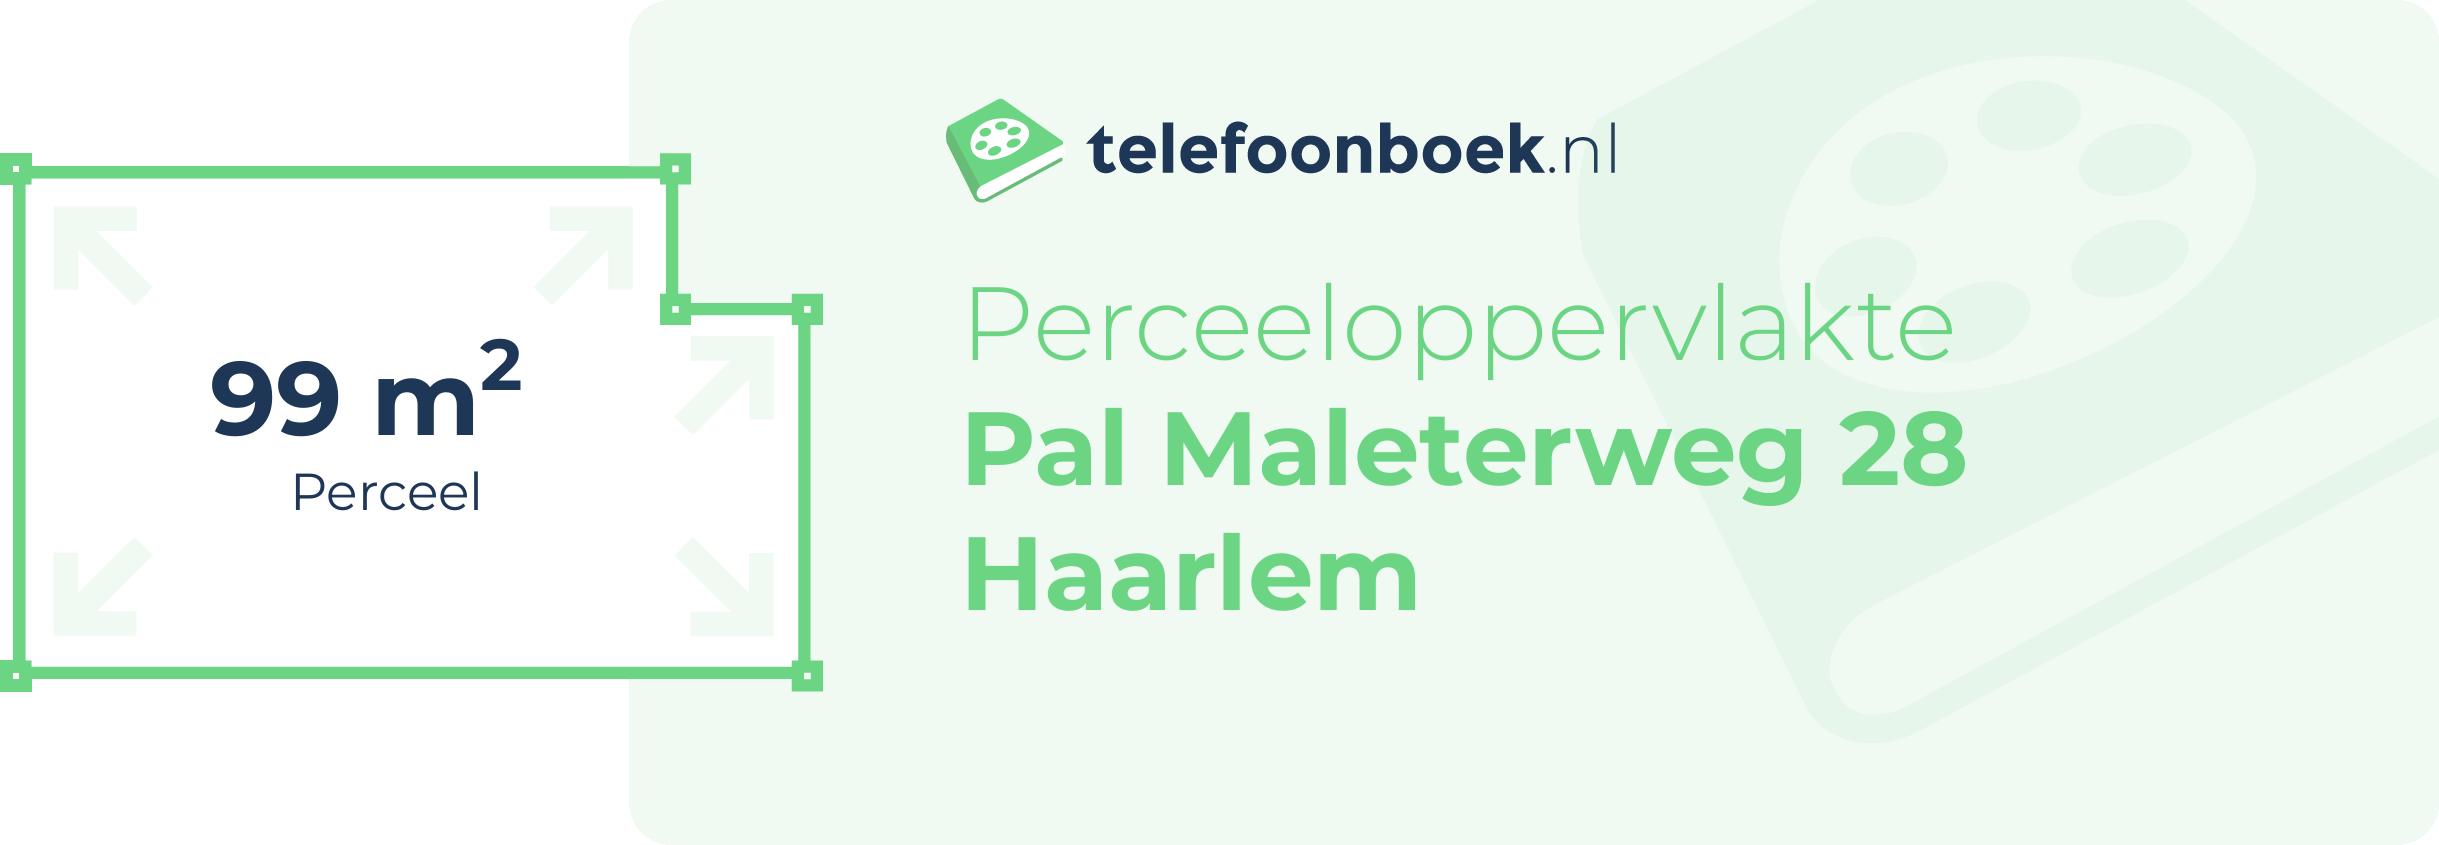 Perceeloppervlakte Pal Maleterweg 28 Haarlem